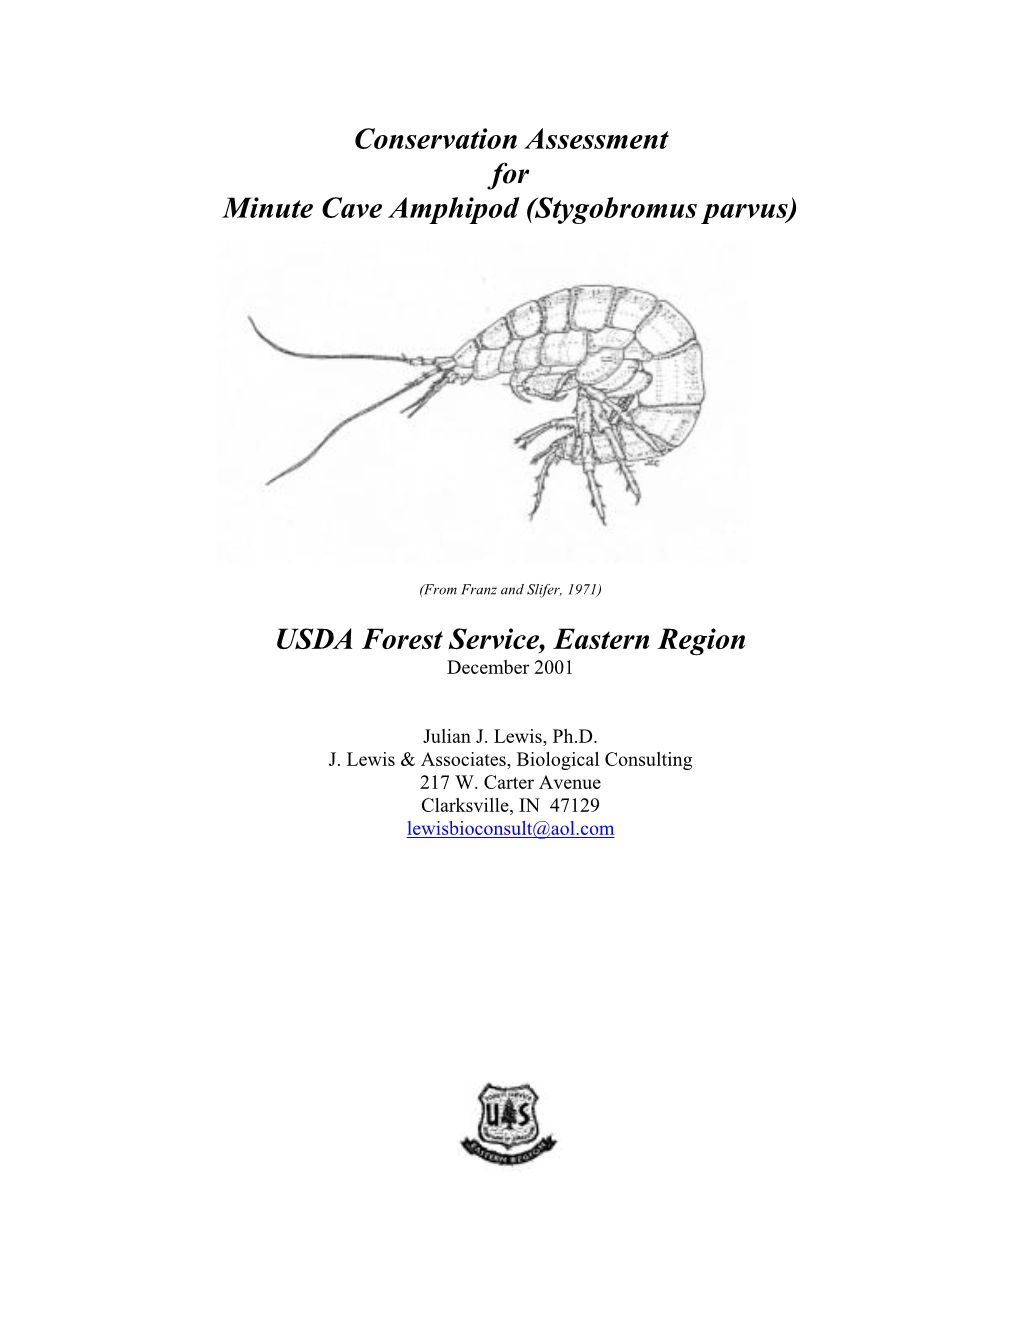 Conservation Assessment for Minute Cave Amphipod (Stygobromus Parvus)